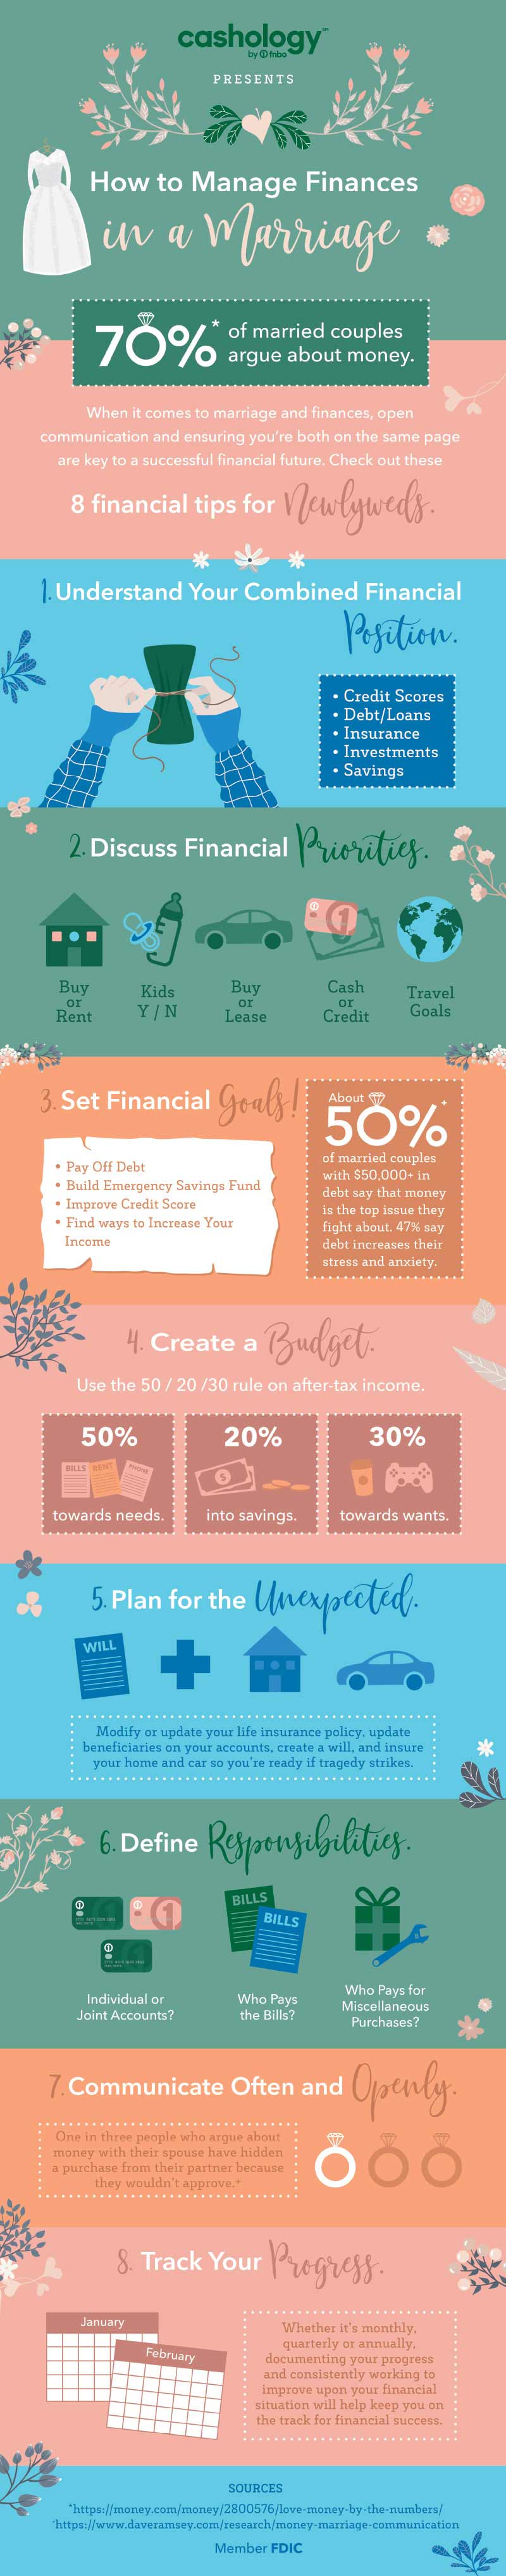 marriage-finances-infographic-800.jpg